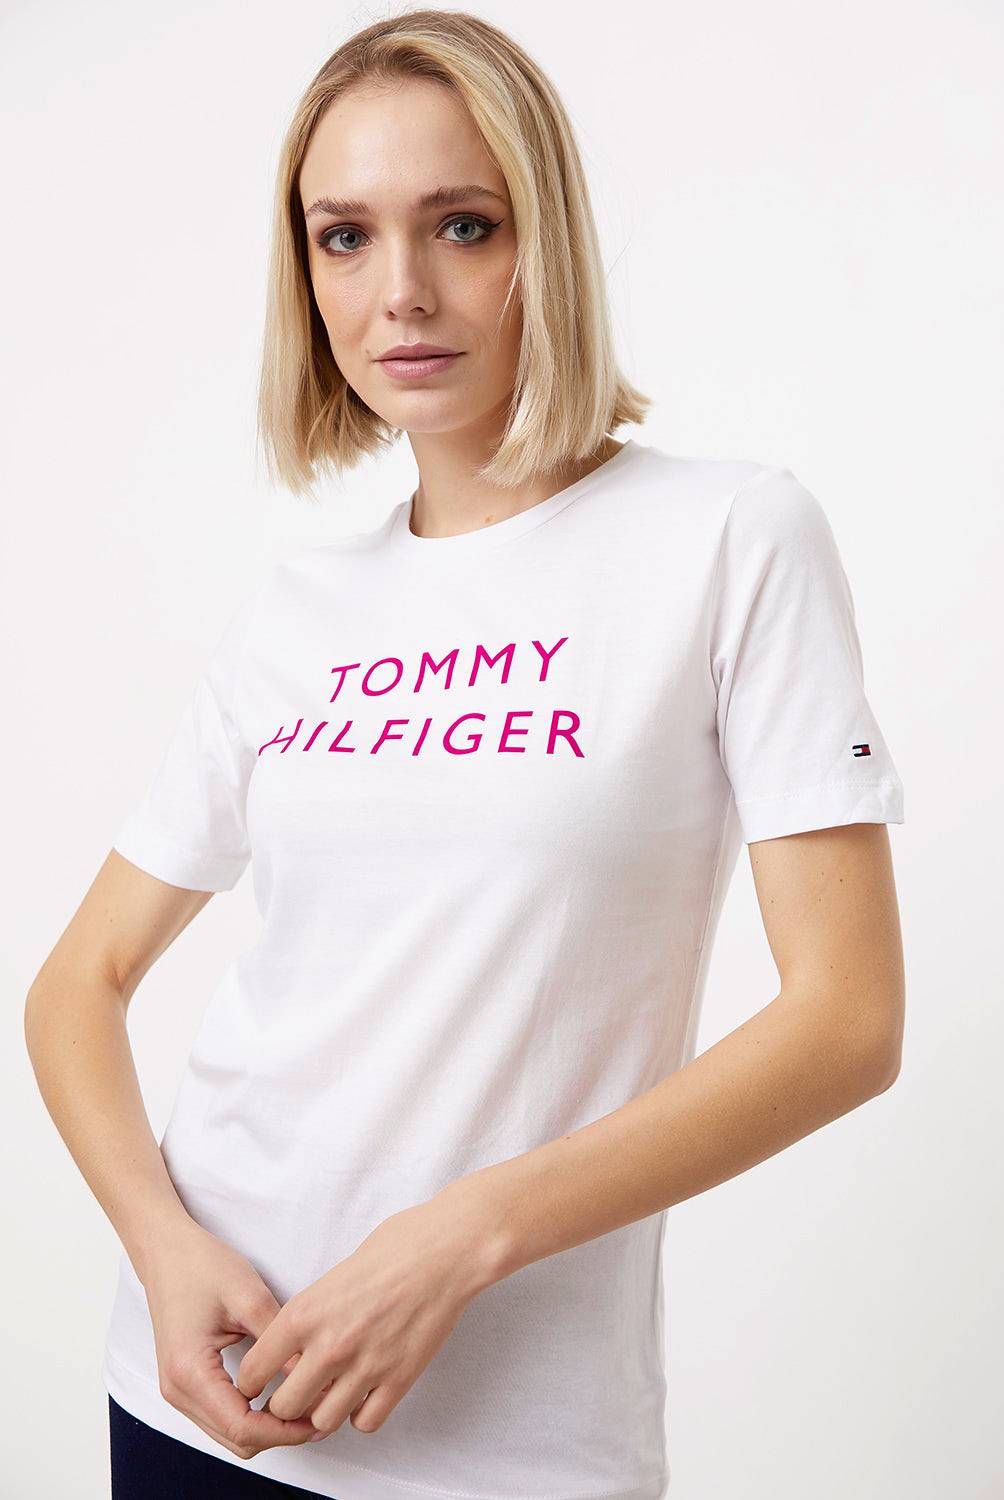 TOMMY HILFIGER - Tommy Hilfiger Polera Estampada Logo Manga Corta Mujer